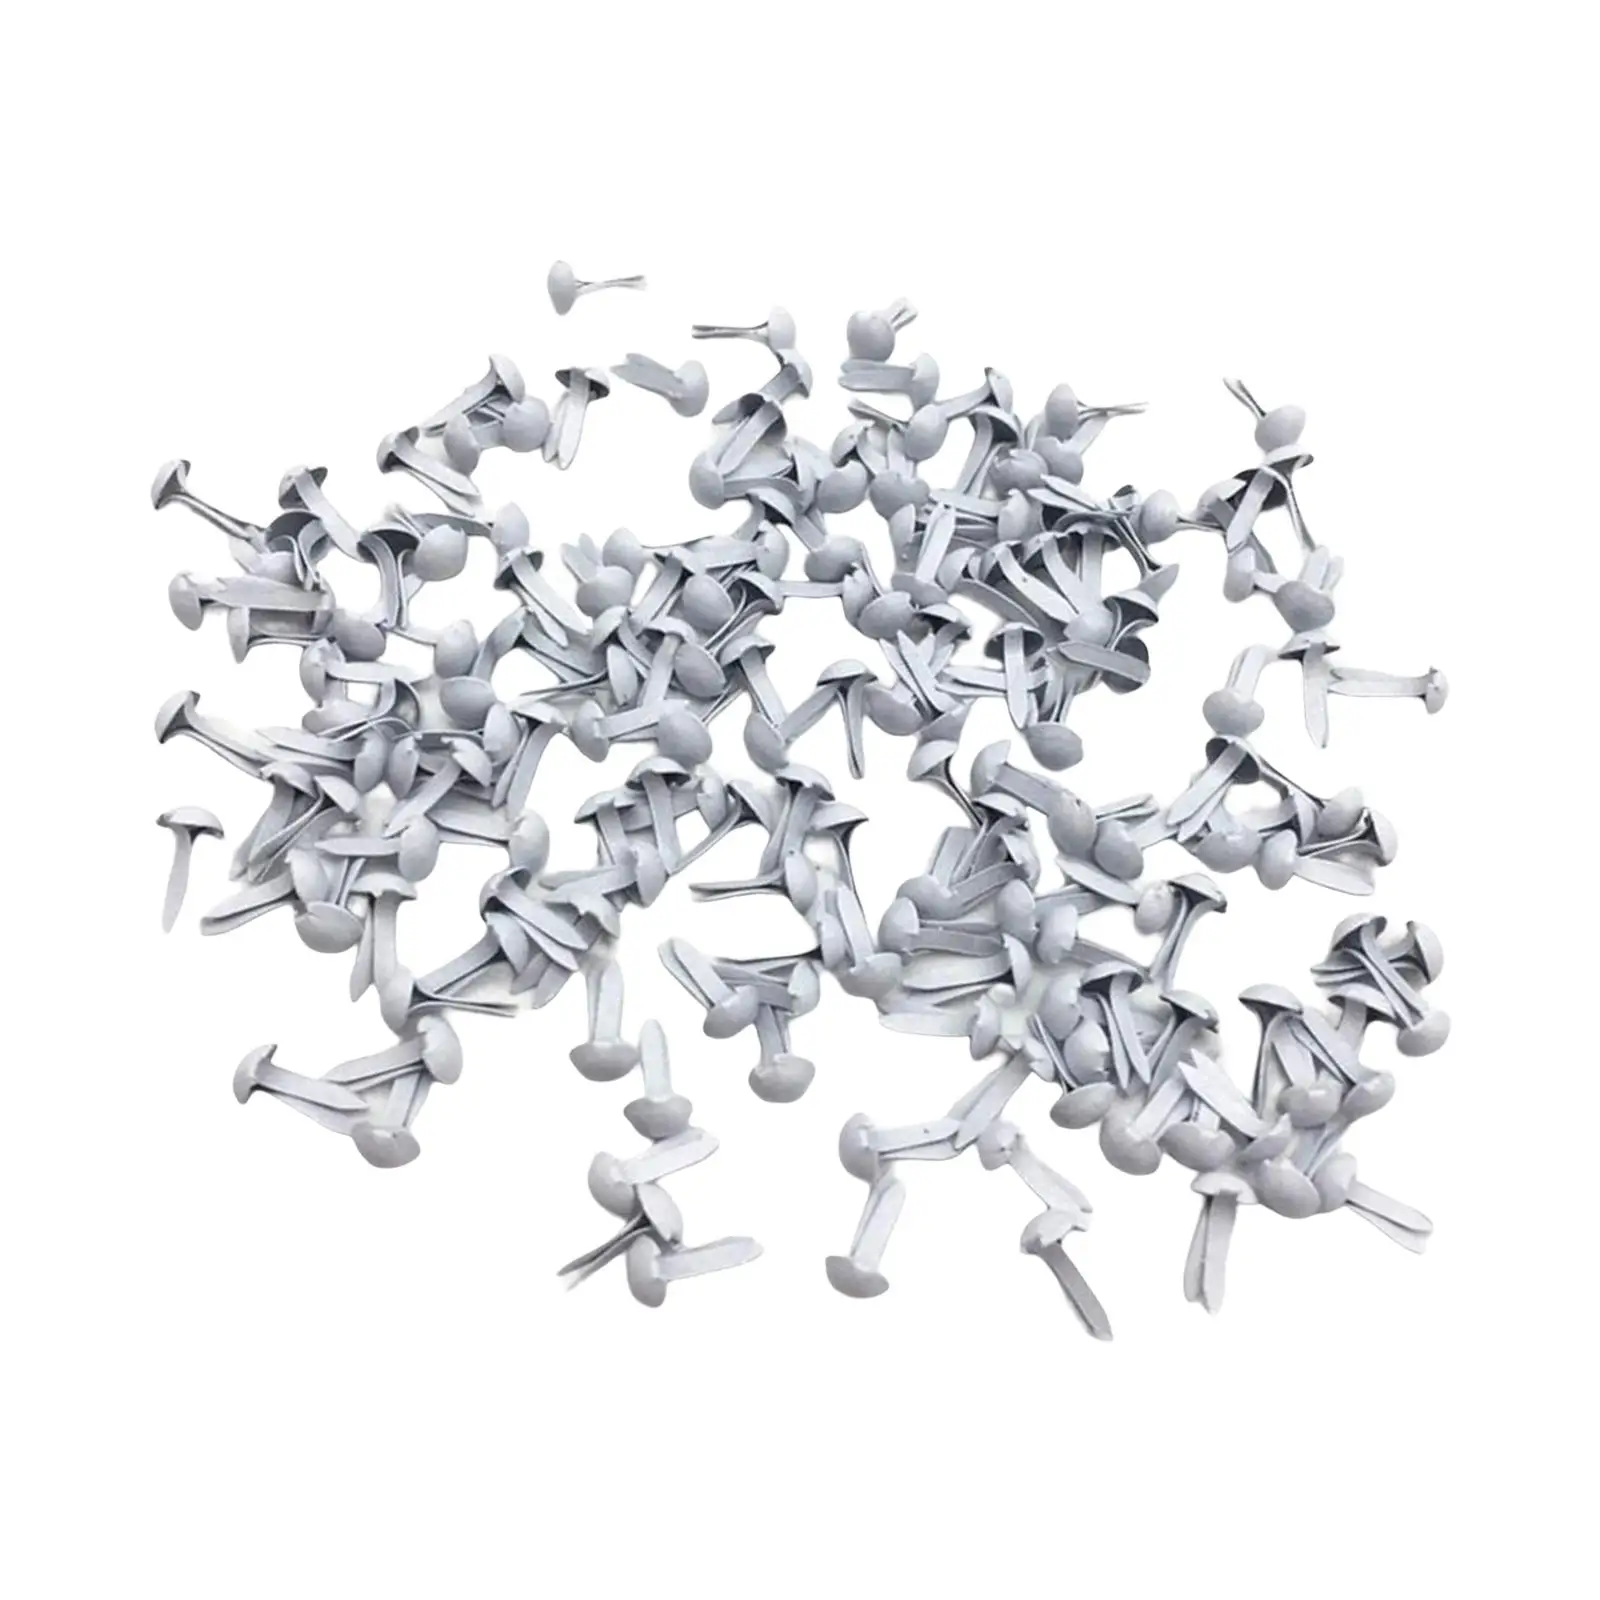 8 x 18 mm Mini Brads for Paper Crafts, 300 Pcs Round Paper Fastener Metal